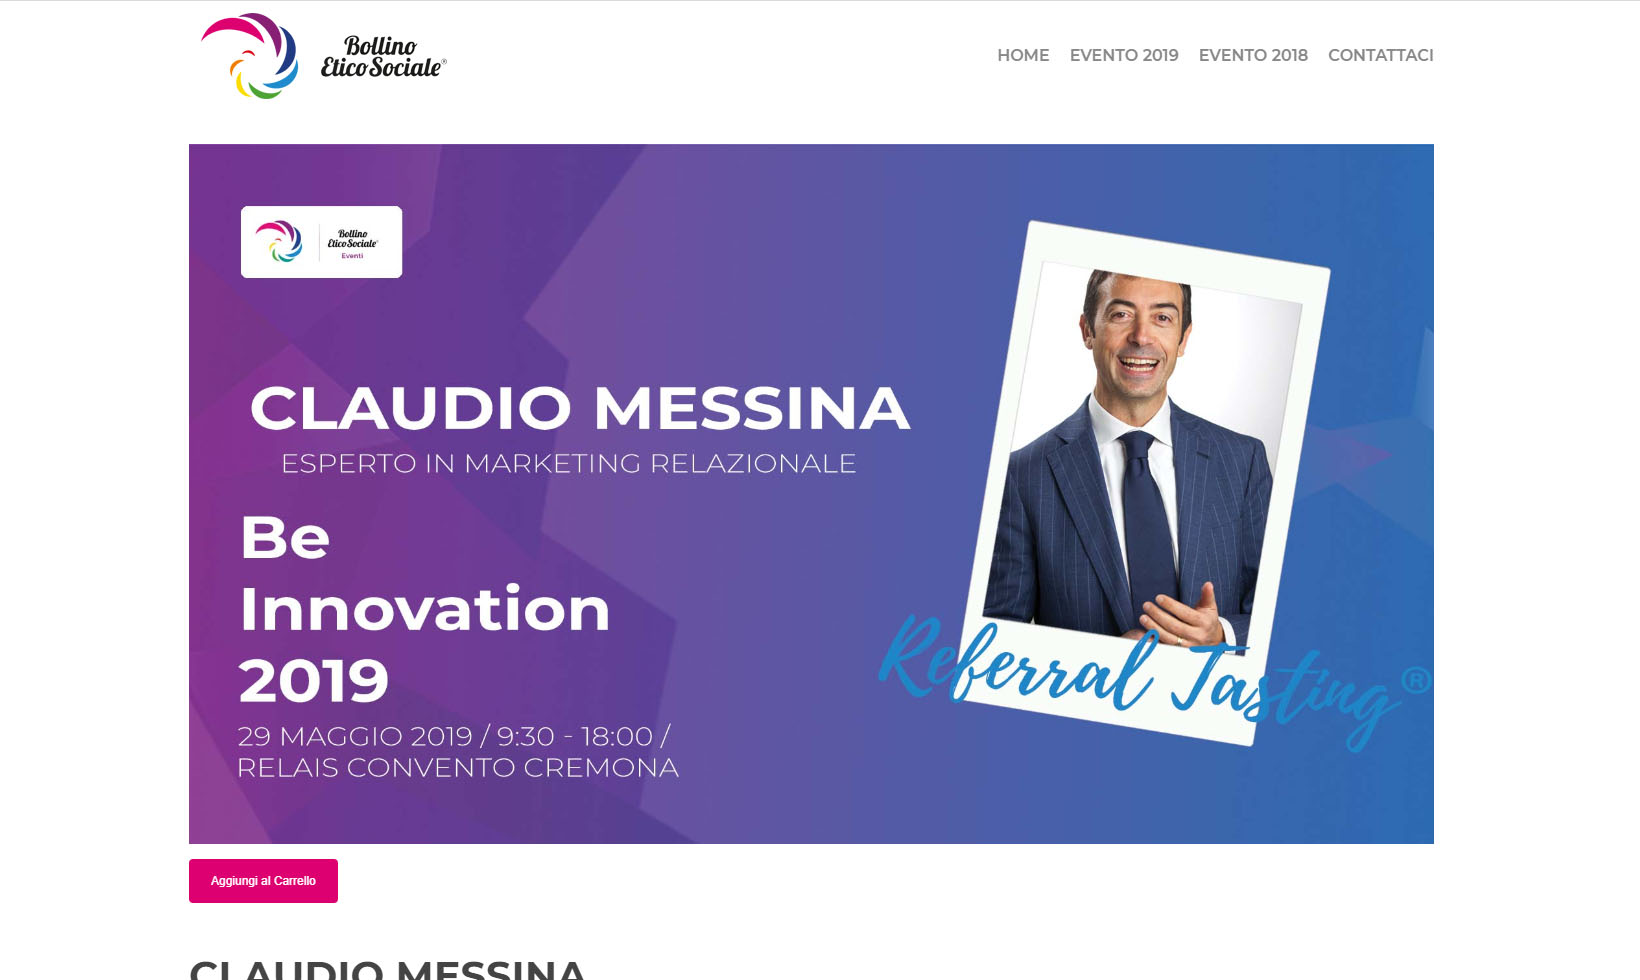 Referral Tasting - Claudio Messina - Bollino Etico Sociale evento - Be Innovation